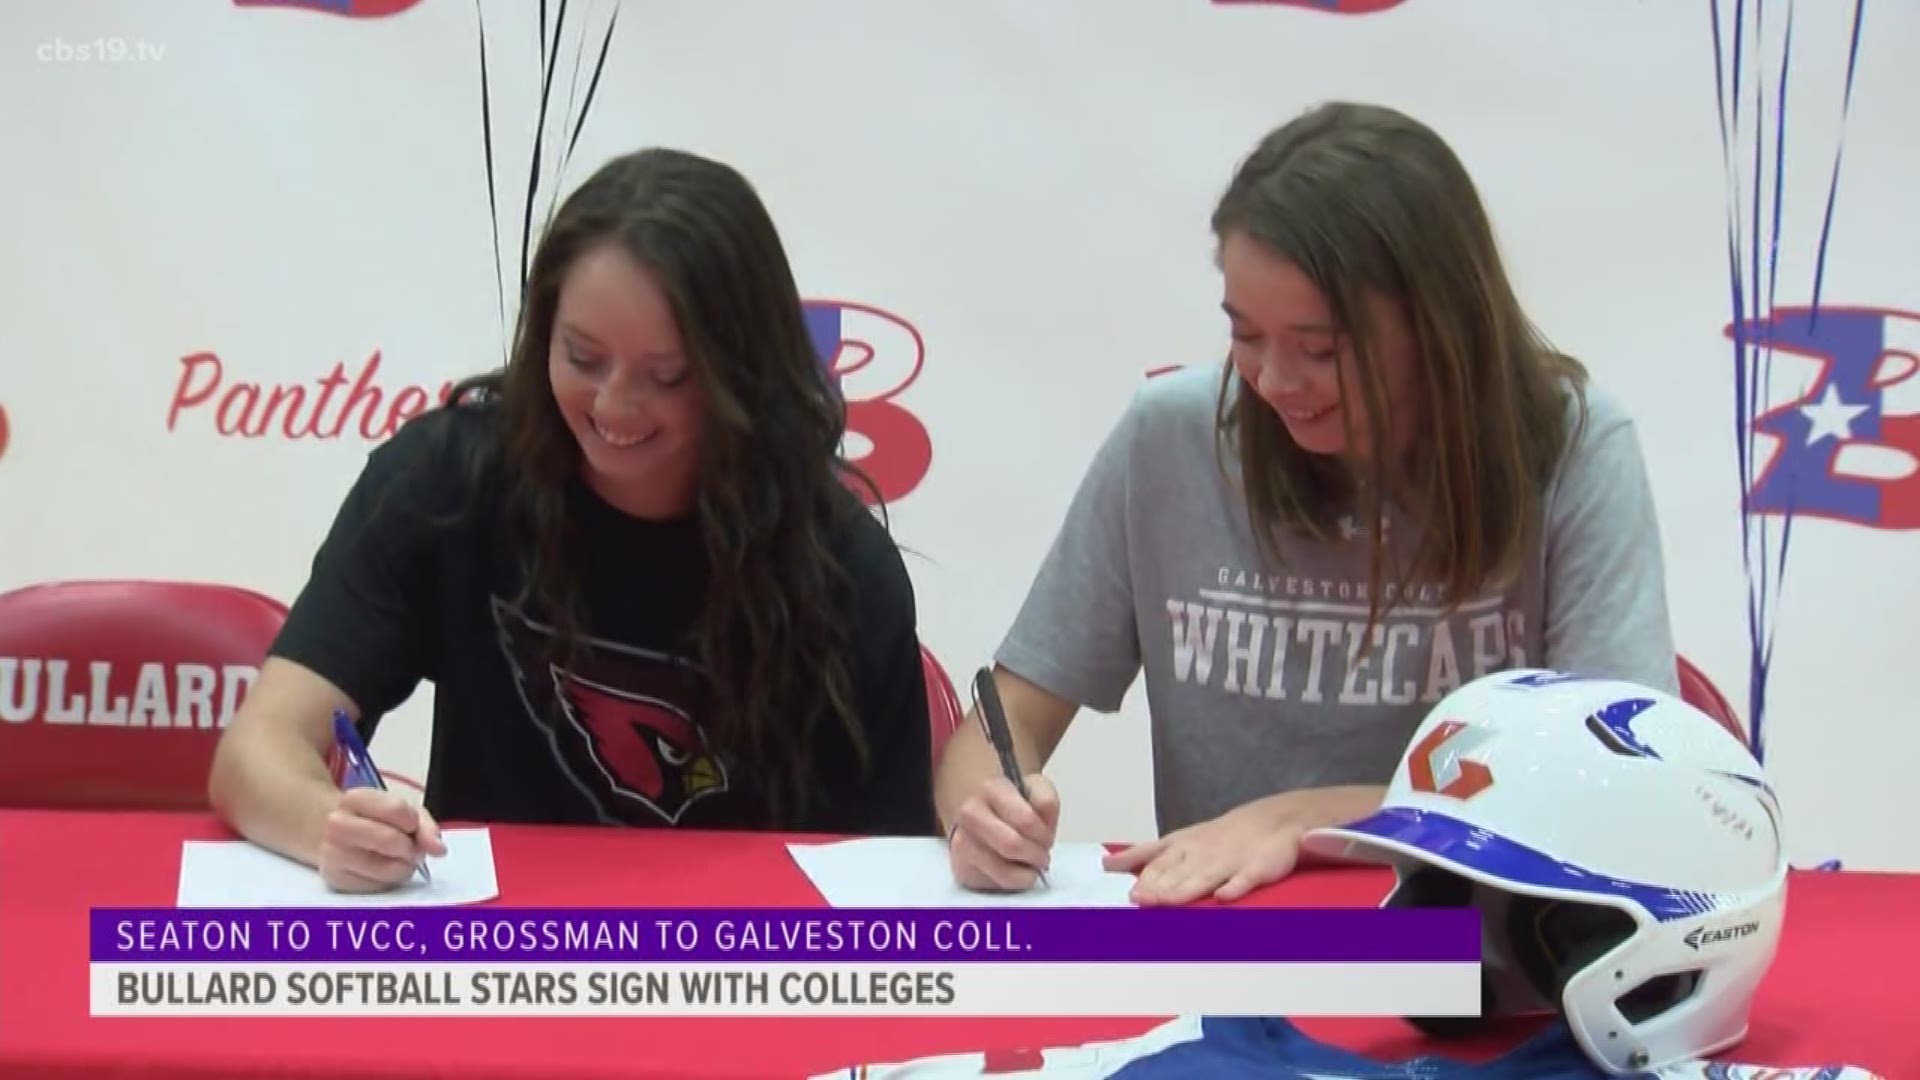 Bullard softball stars sign with colleges